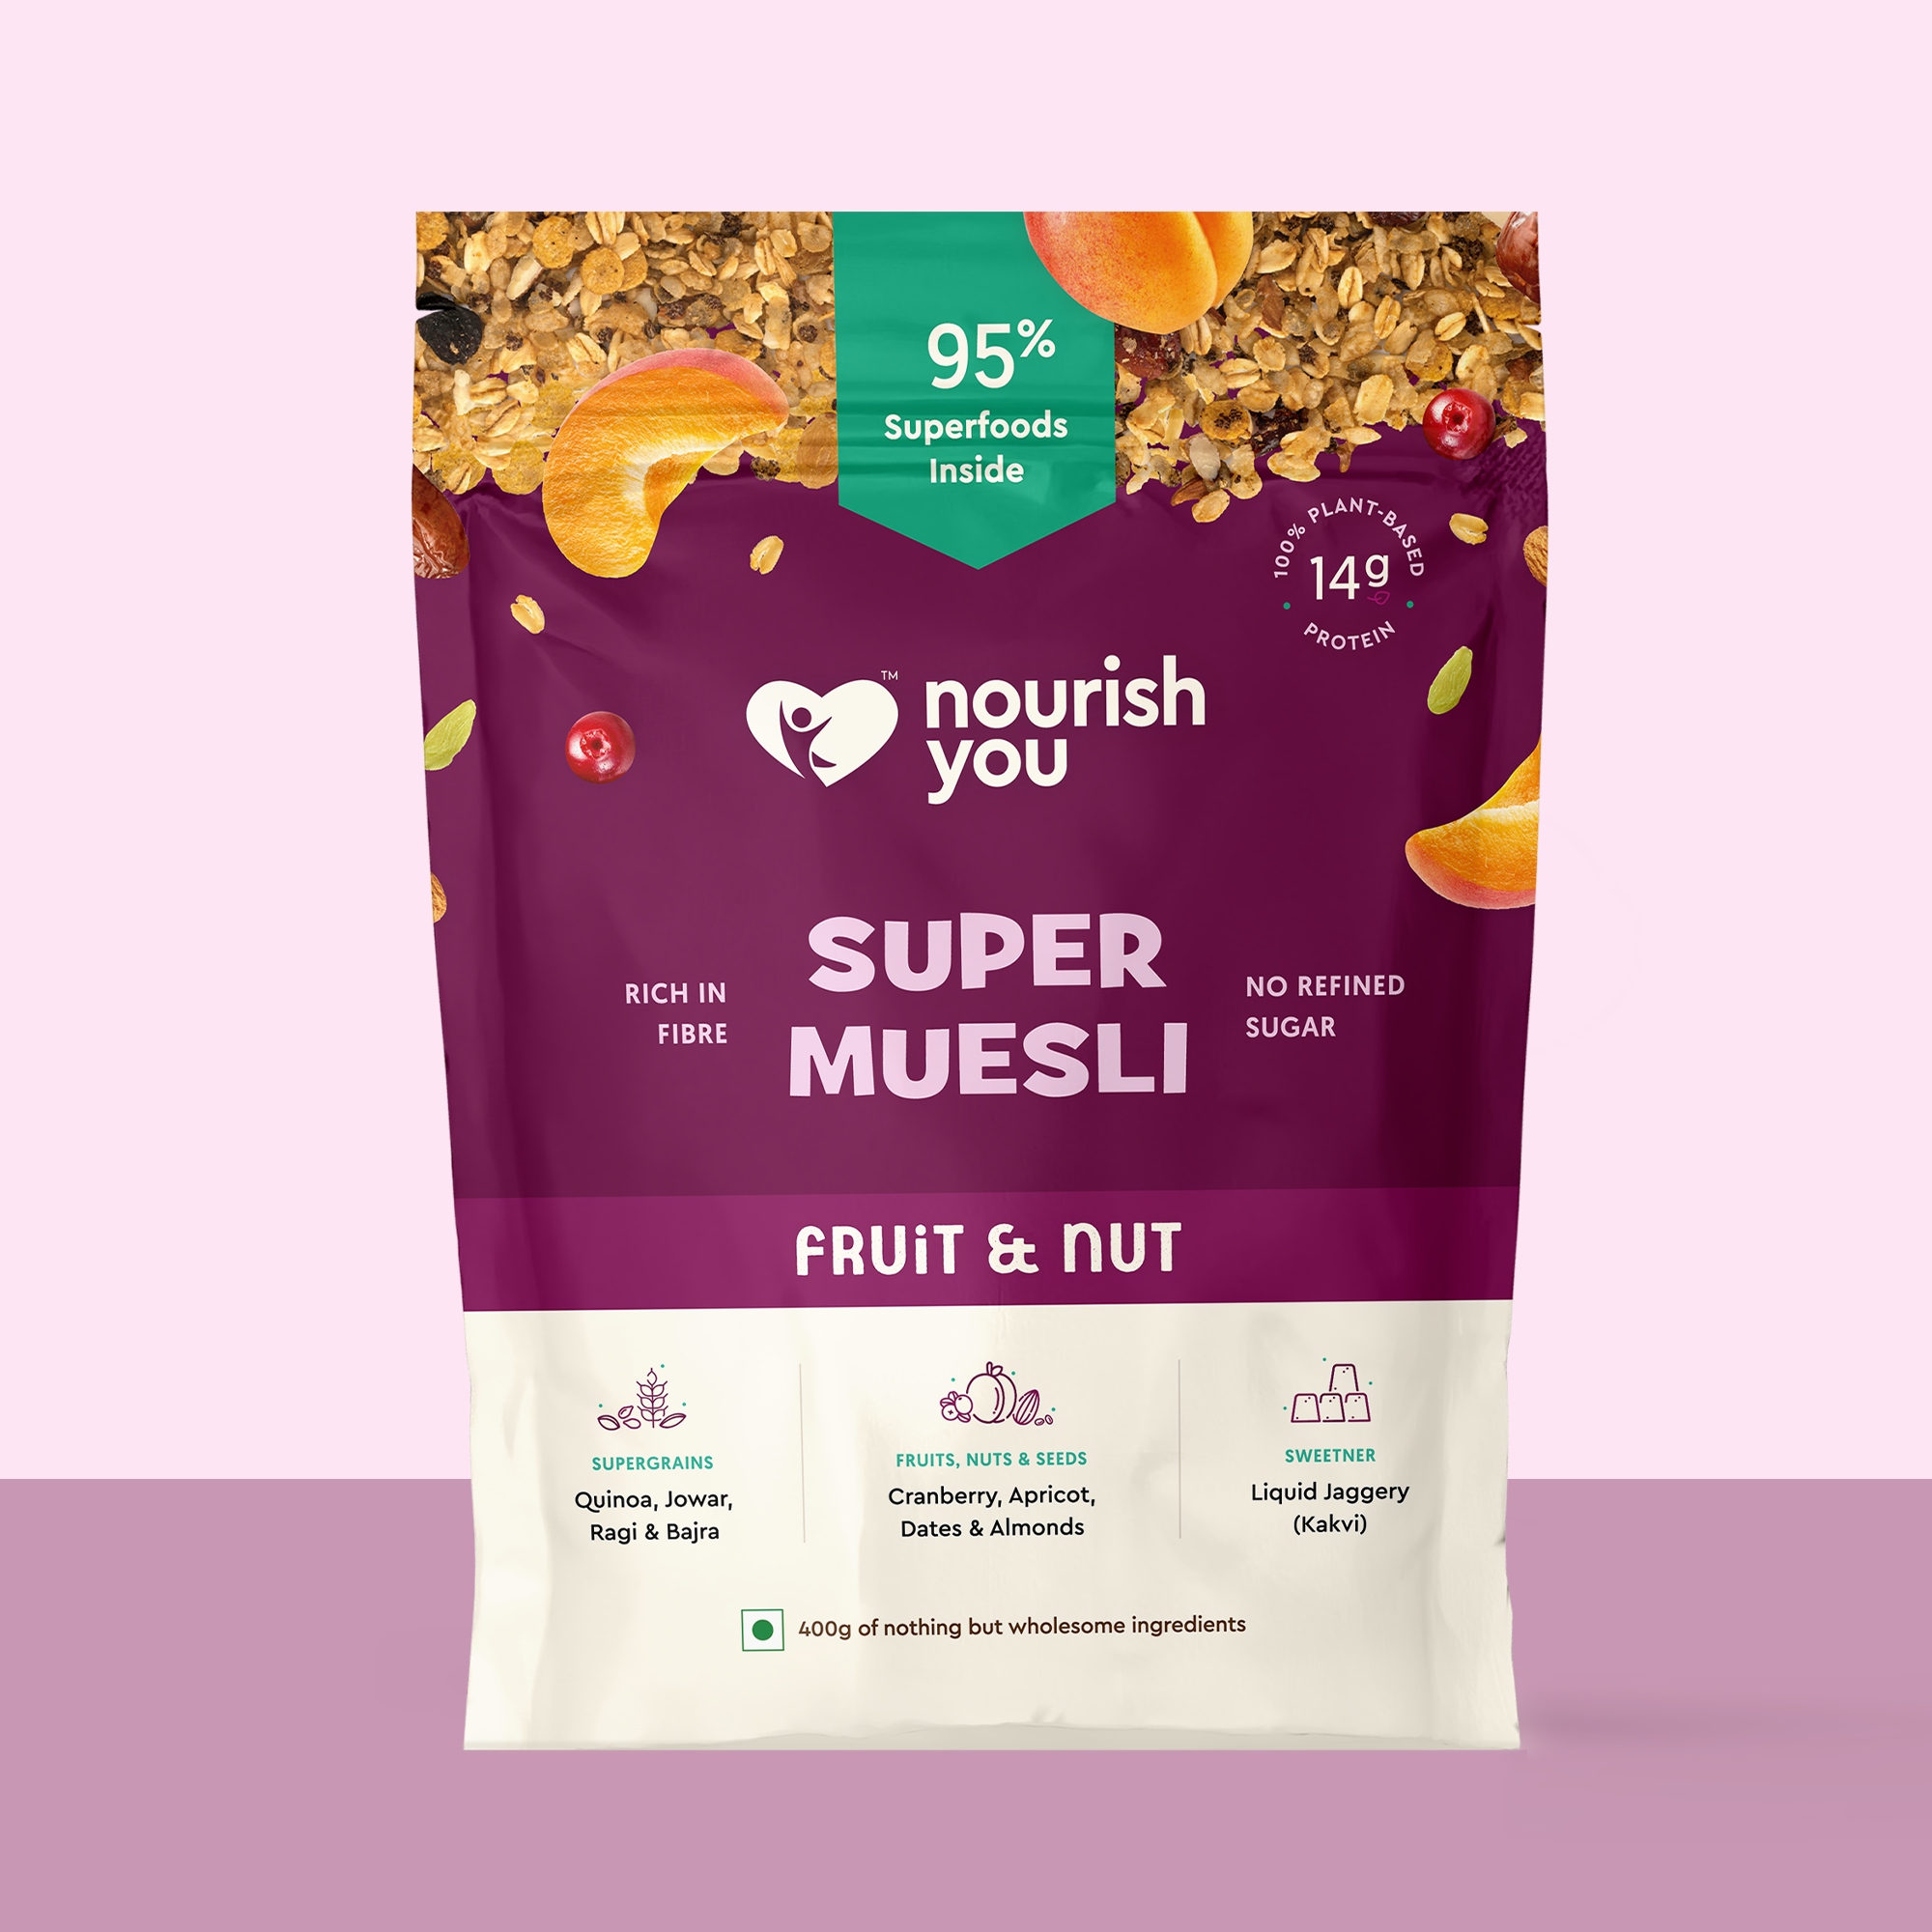 Nourish You Super muesli - fruit & nut